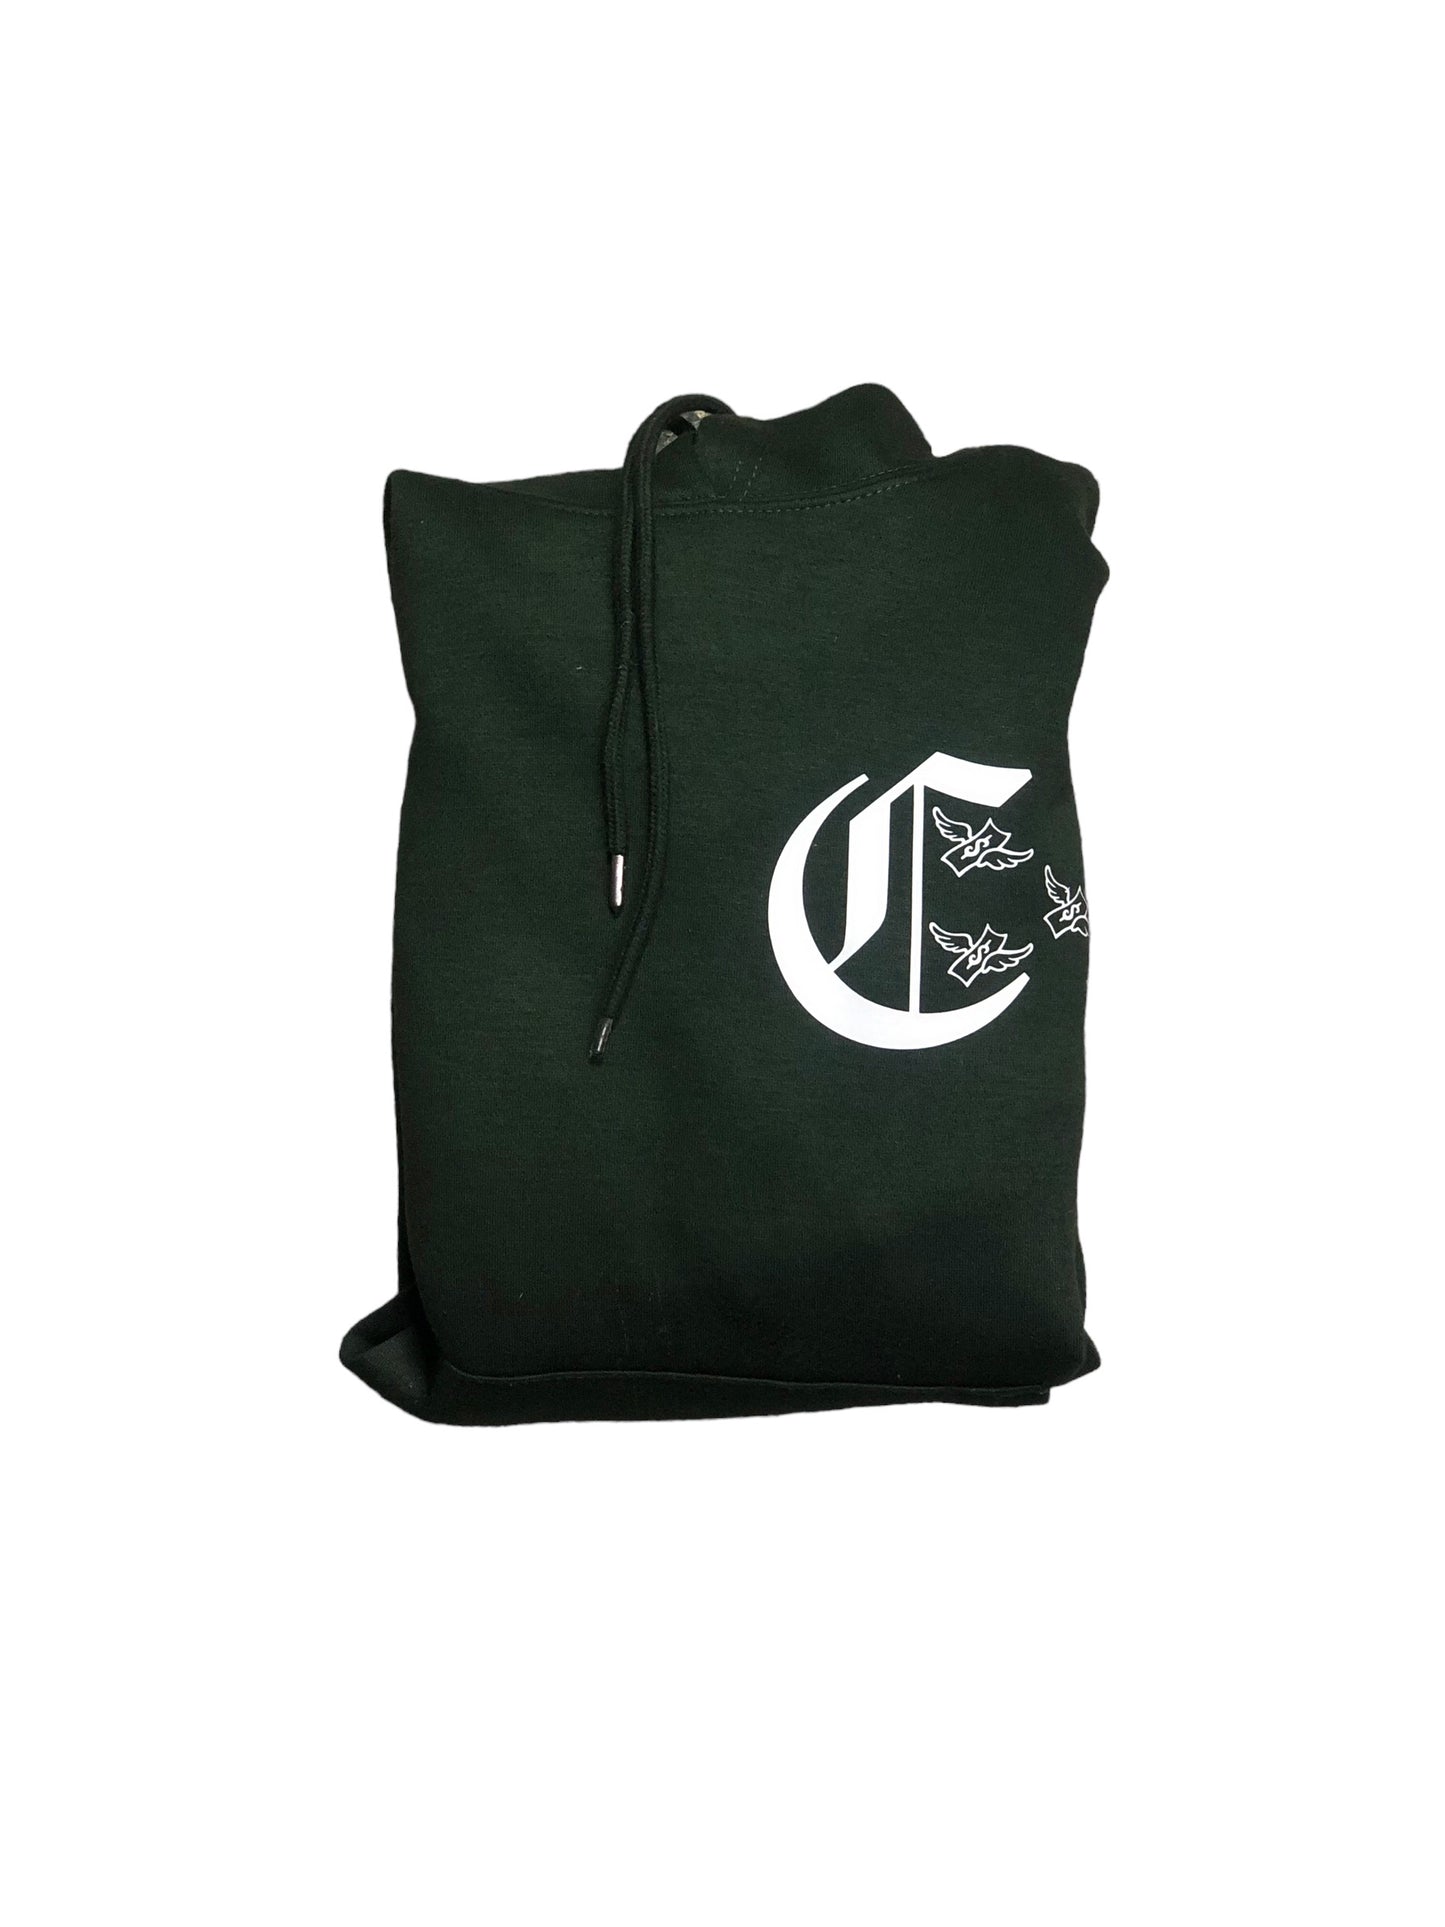 Checkchaser “Genuine Merchandise v2” Sweatsuit